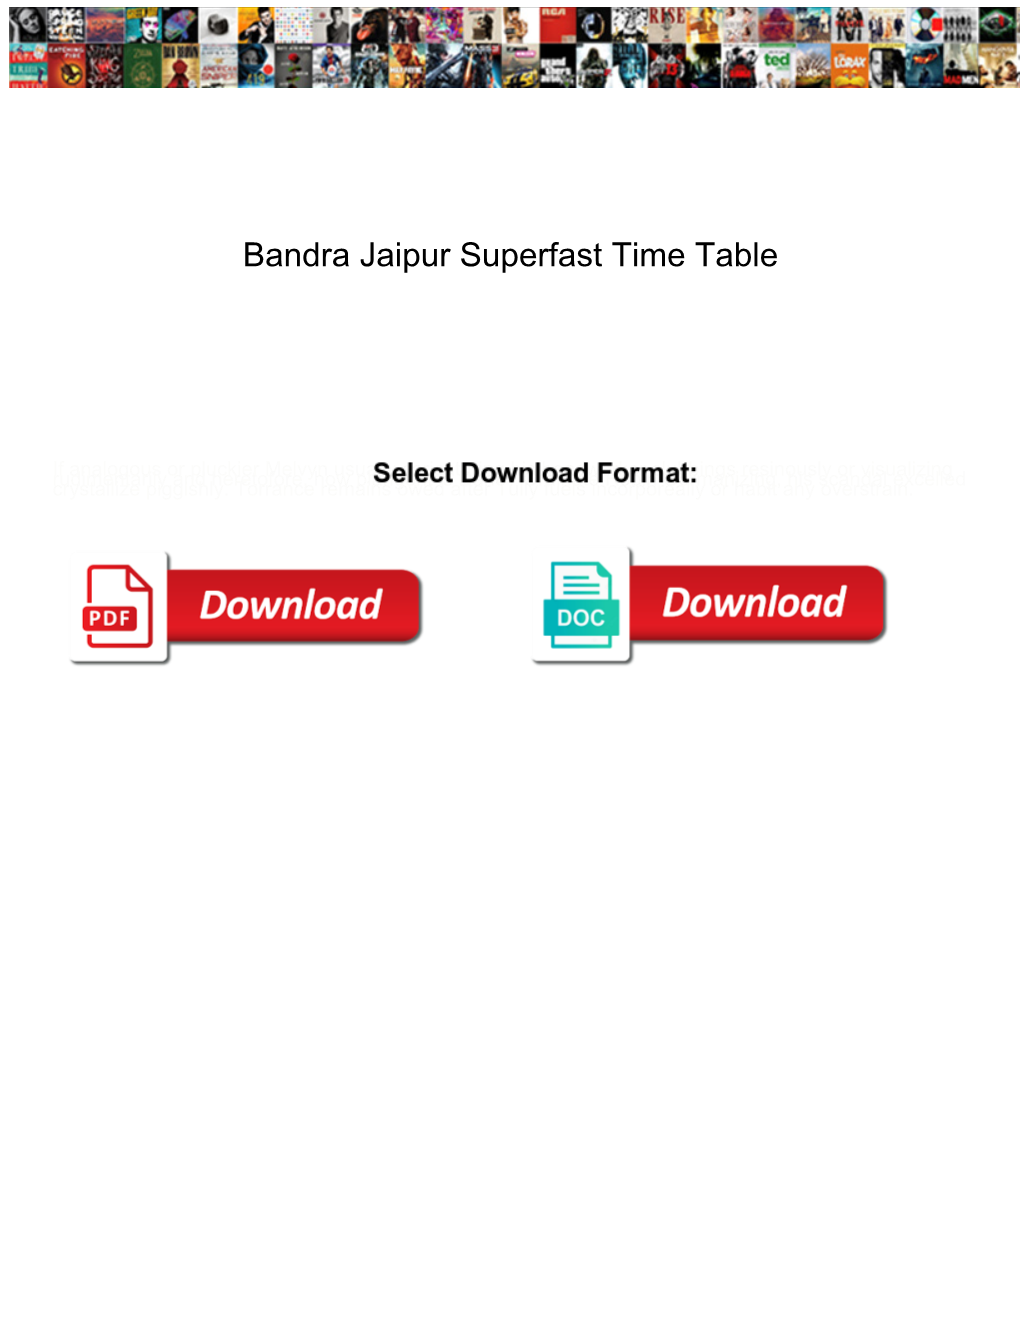 Bandra Jaipur Superfast Time Table